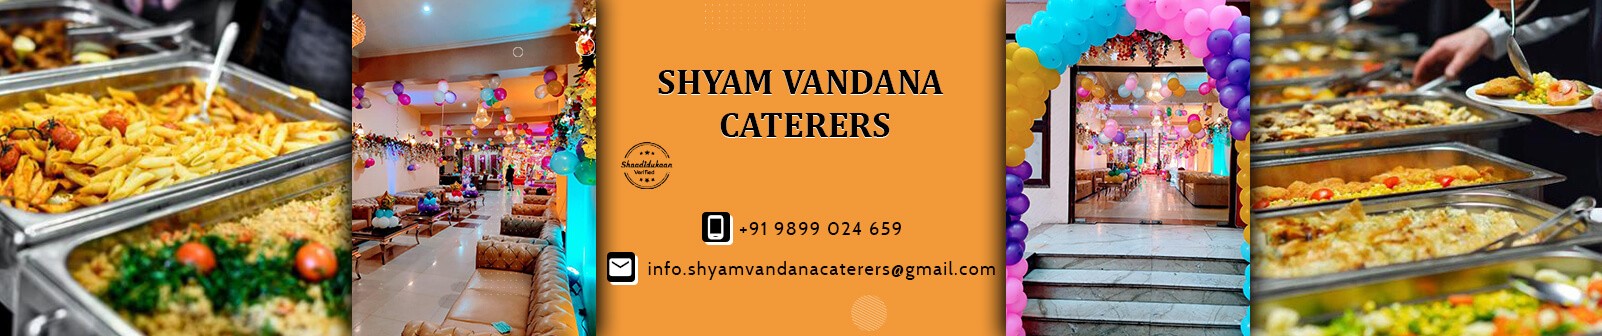 shyam-vandana-caterers